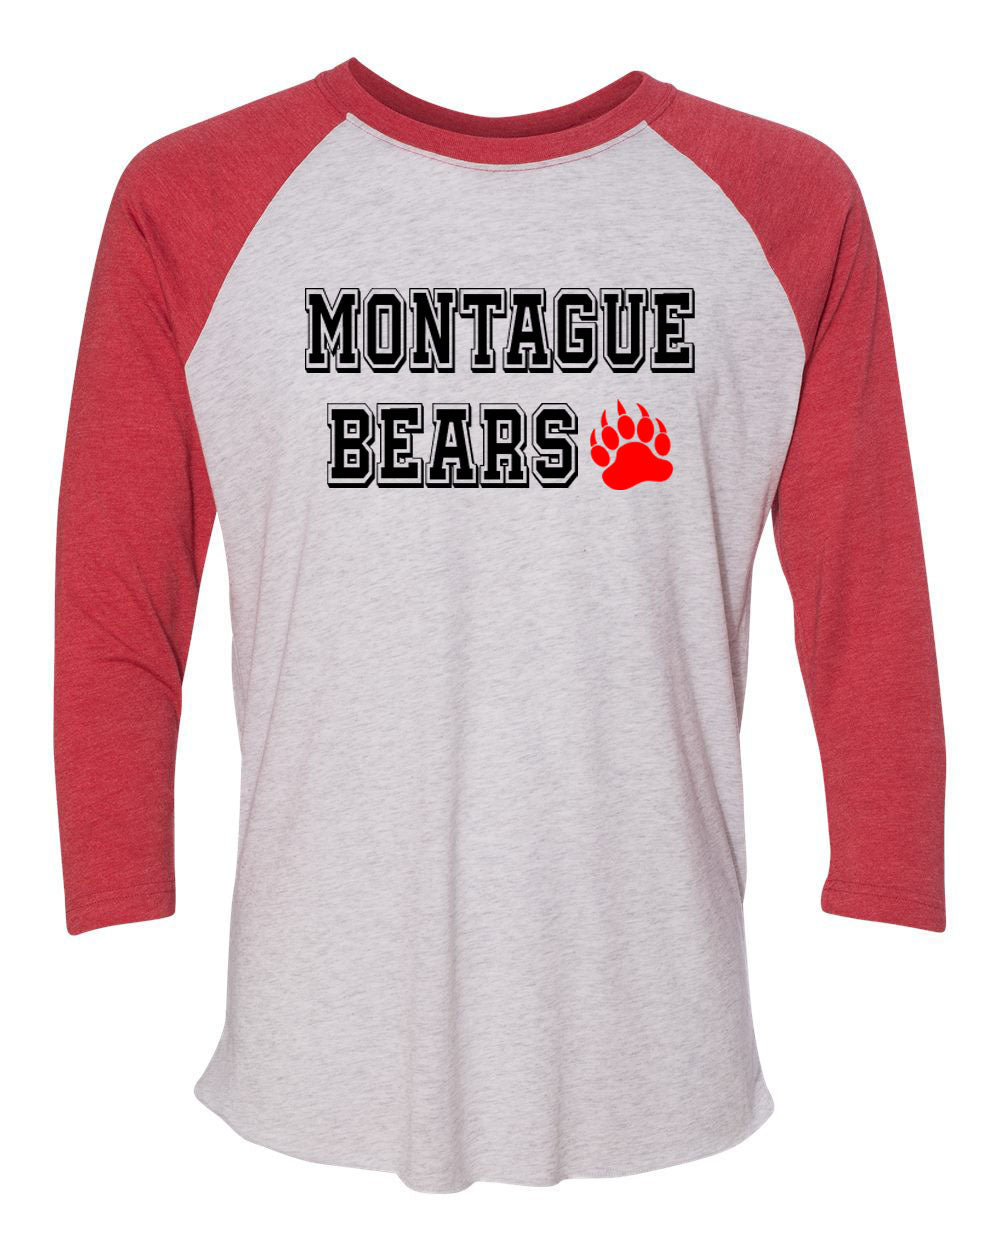 Montague design 6 raglan shirt